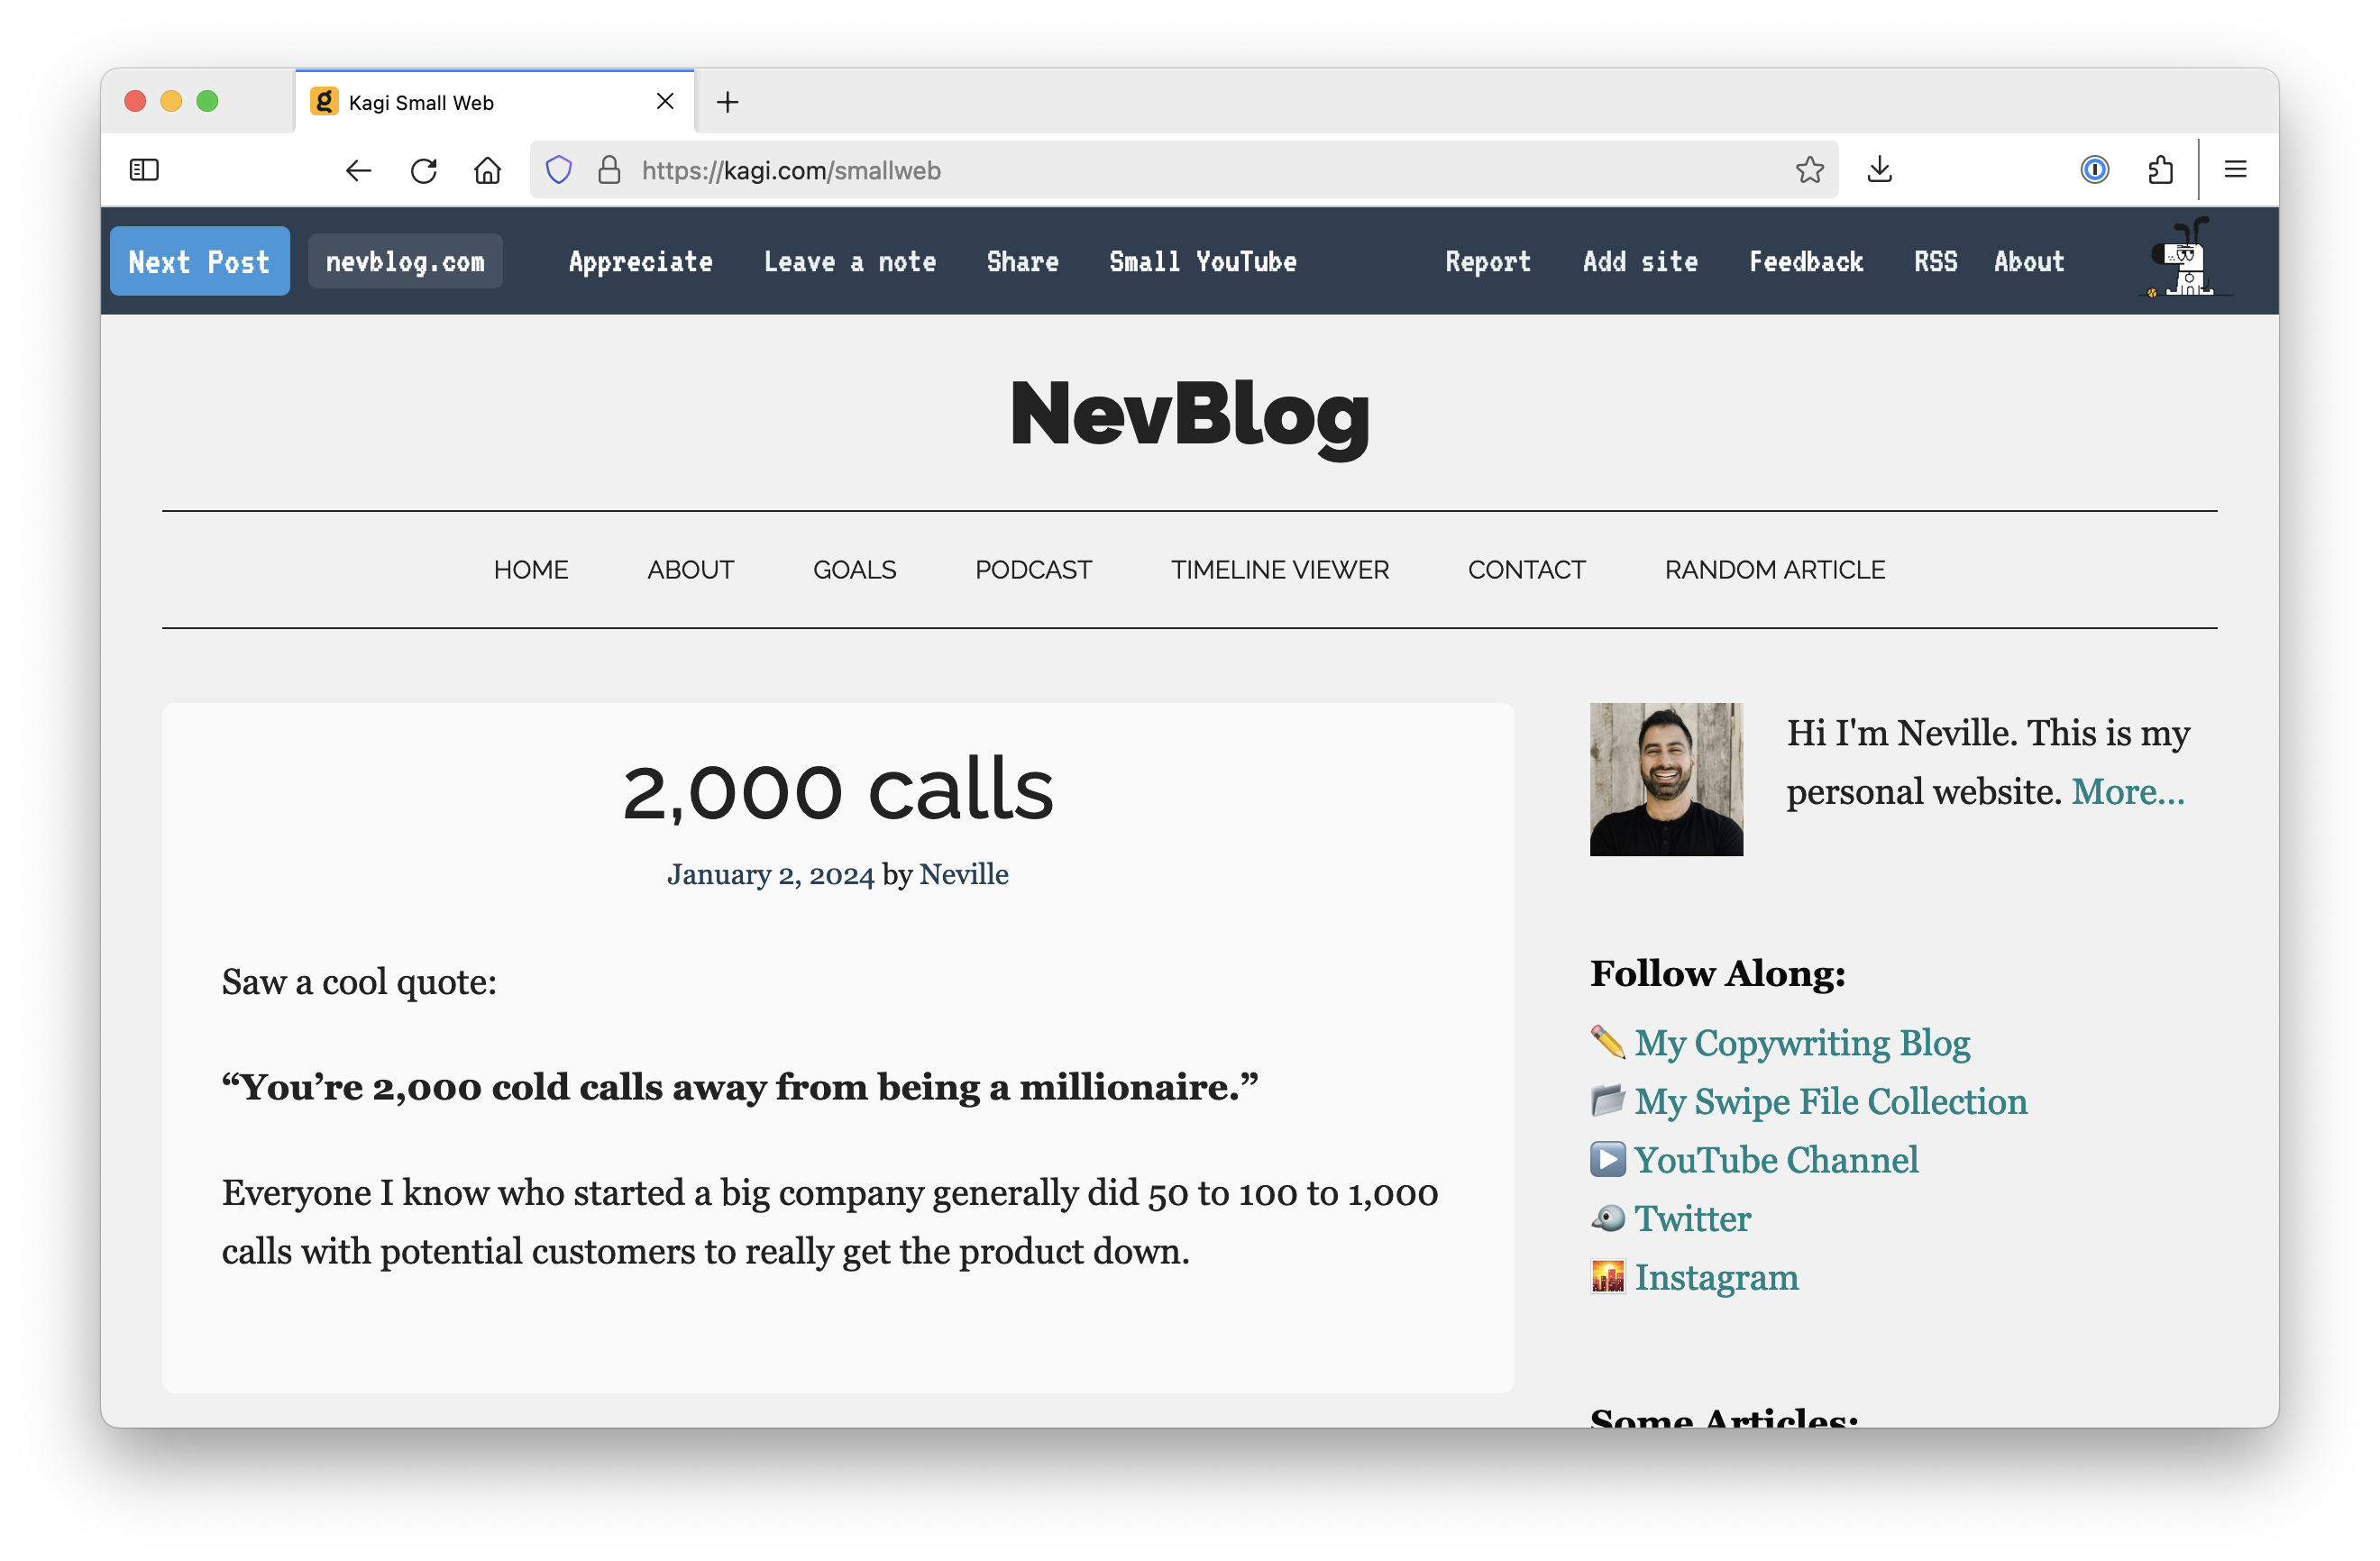 A screenshot of Kagi Small Web showcasing the website NevBlog.